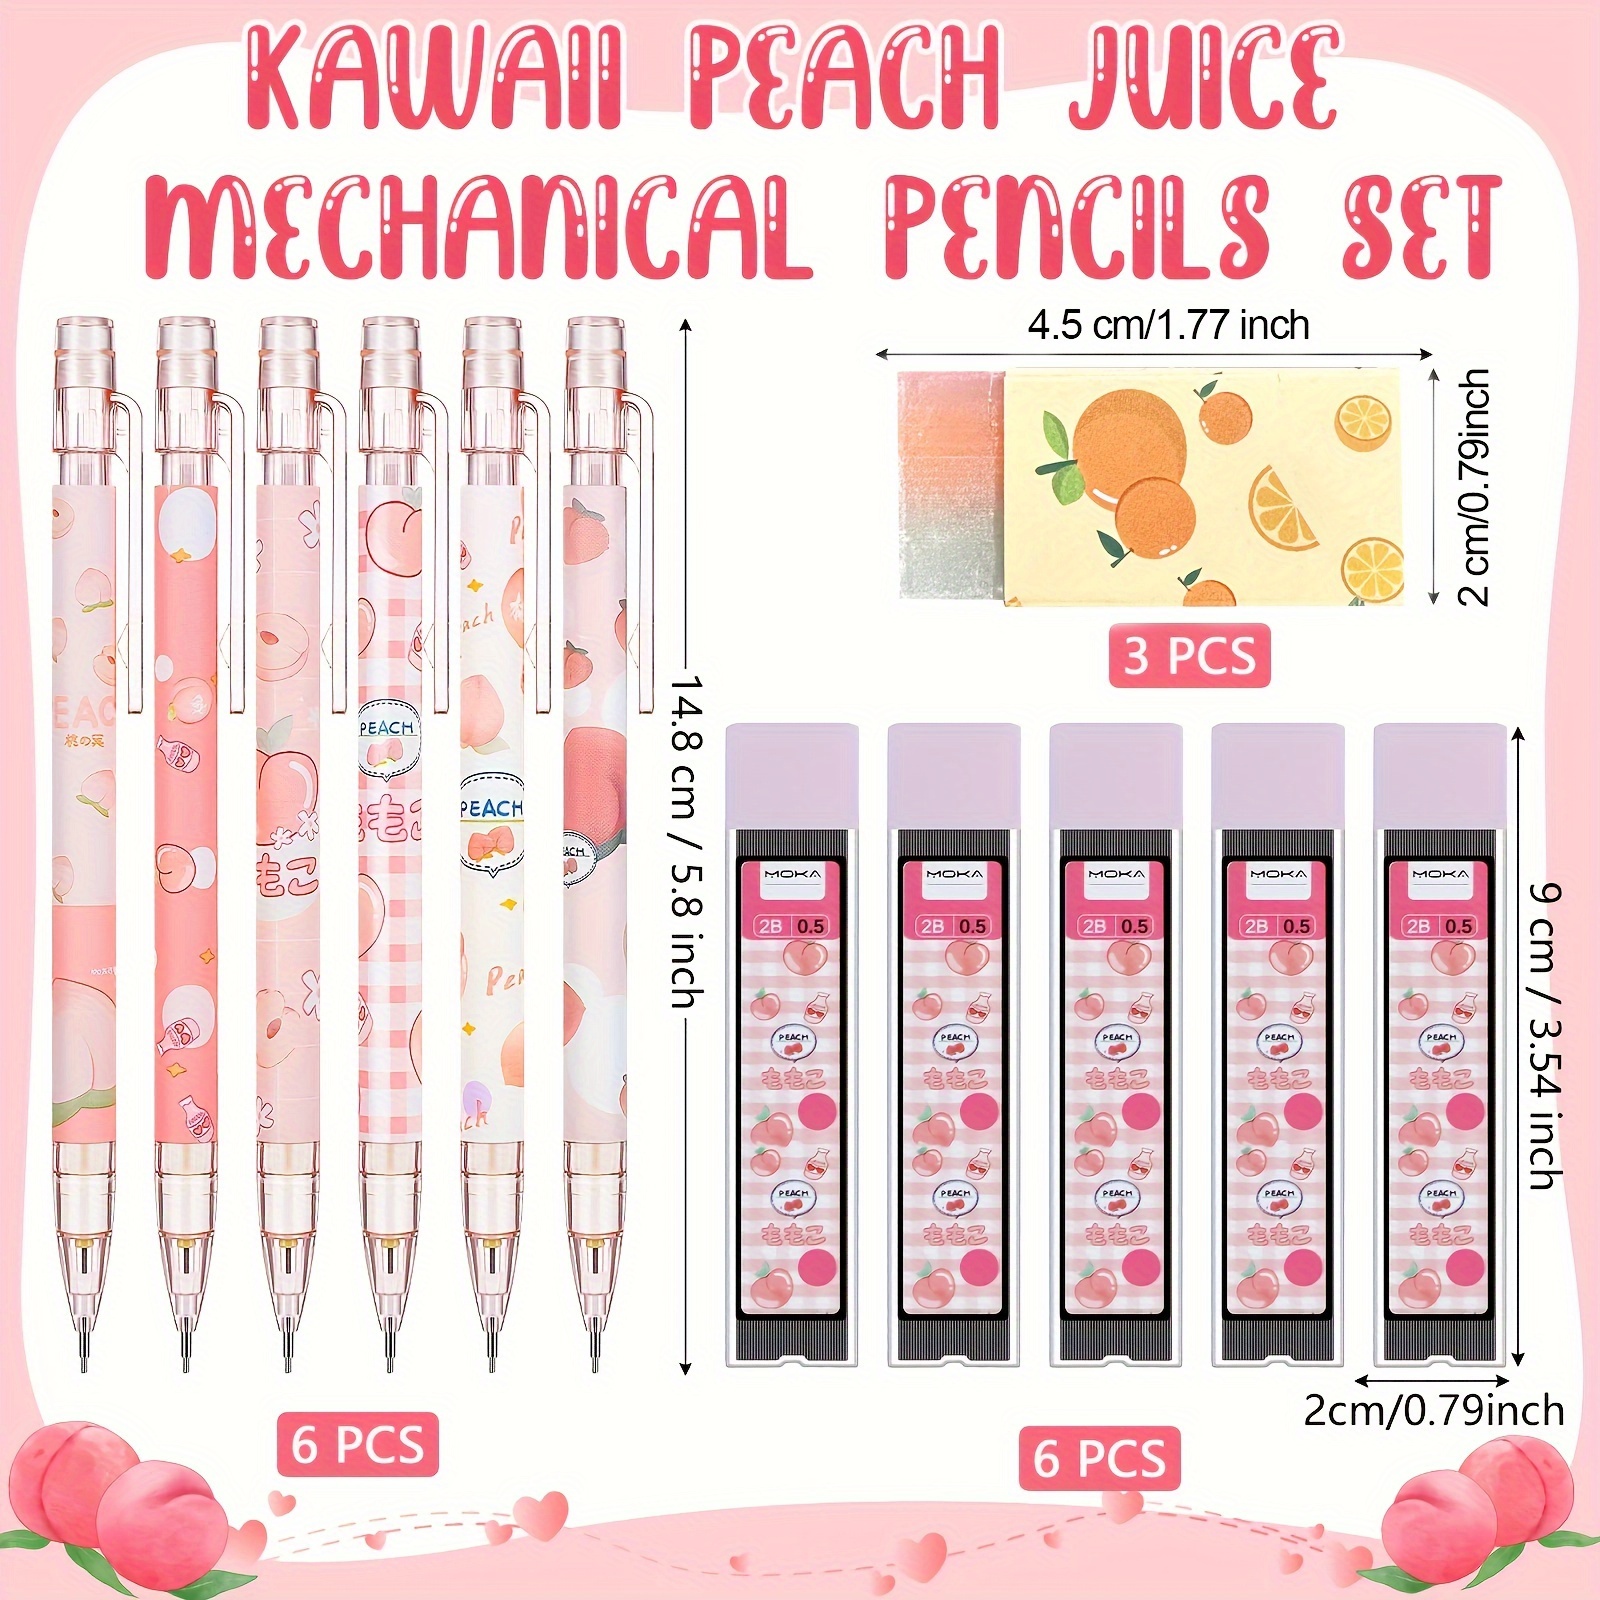 Kawaii Cute Cartoon Mechanical Pencil Set With Lead Refill and